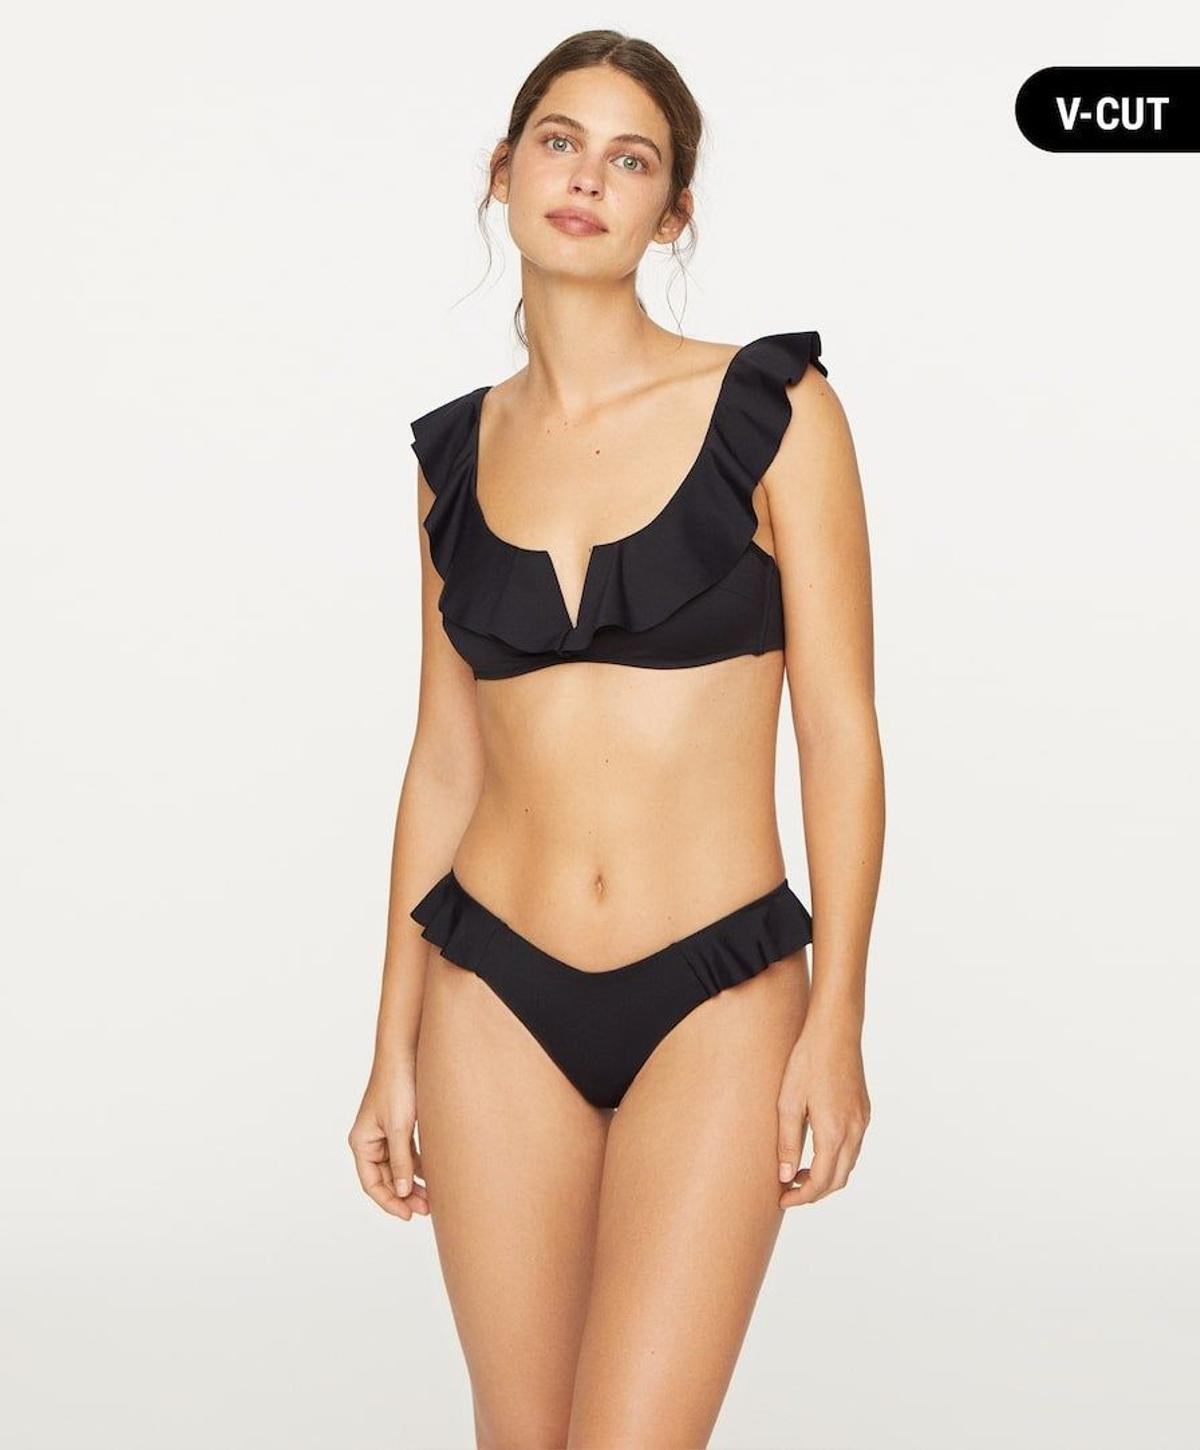 Bikini de volantes de Oysho (Precio: top 19,99 euros y braguita 12,99 euros)